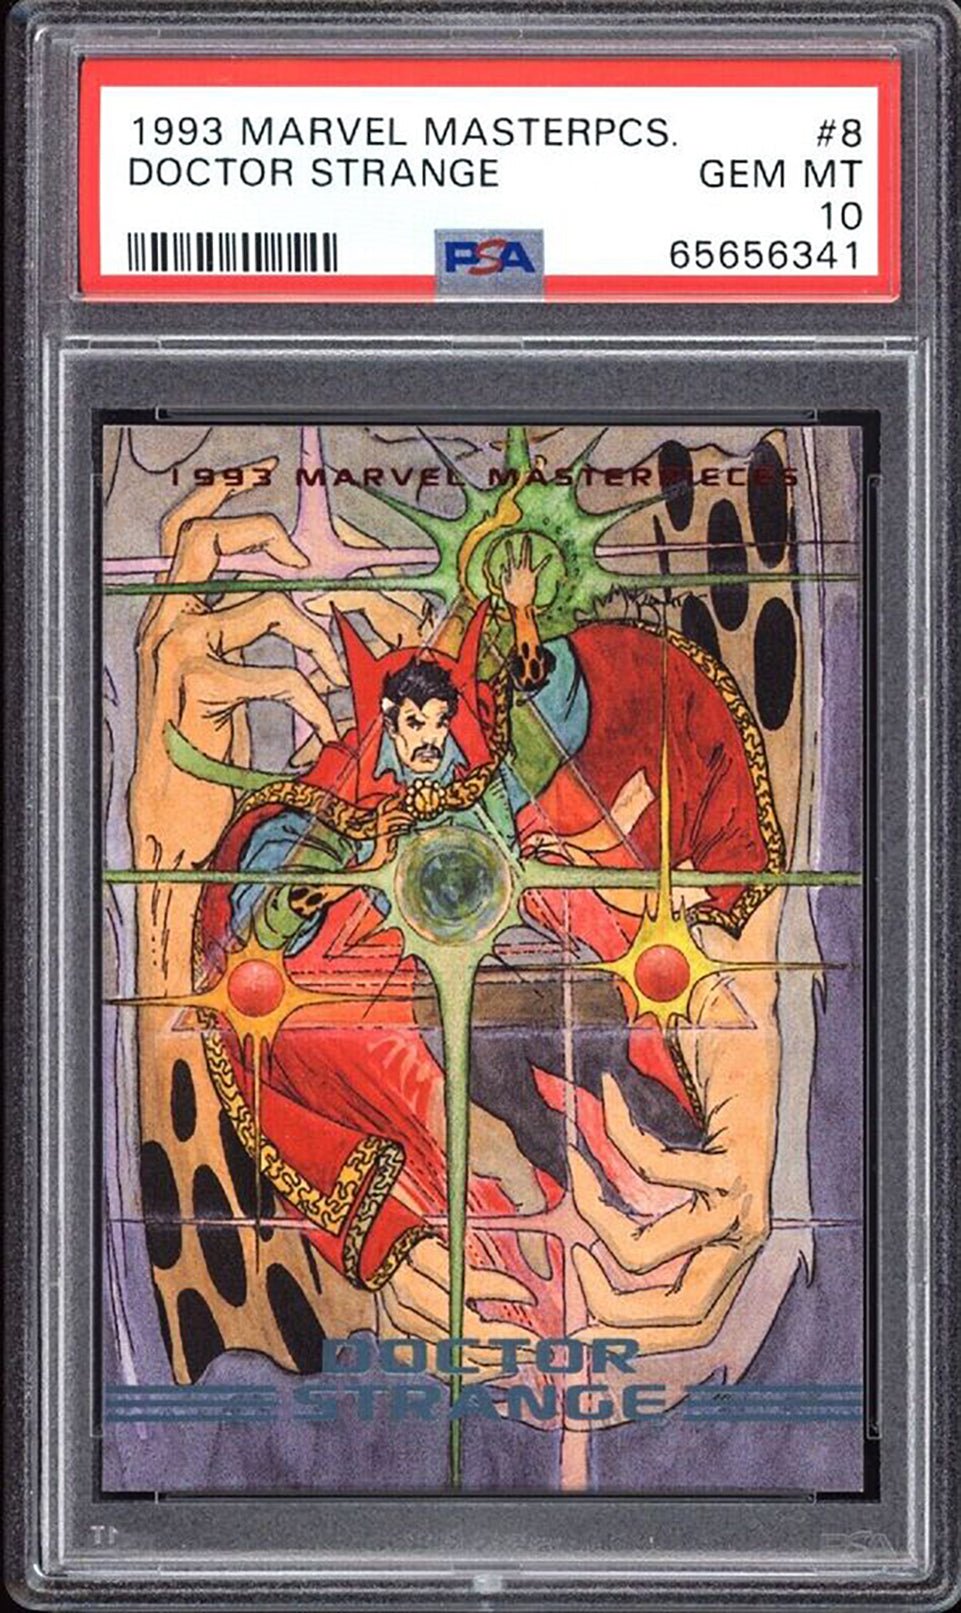 DOCTOR STRANGE PSA 10 1993 Marvel Masterpieces #8 Marvel Base Graded Cards - Hobby Gems